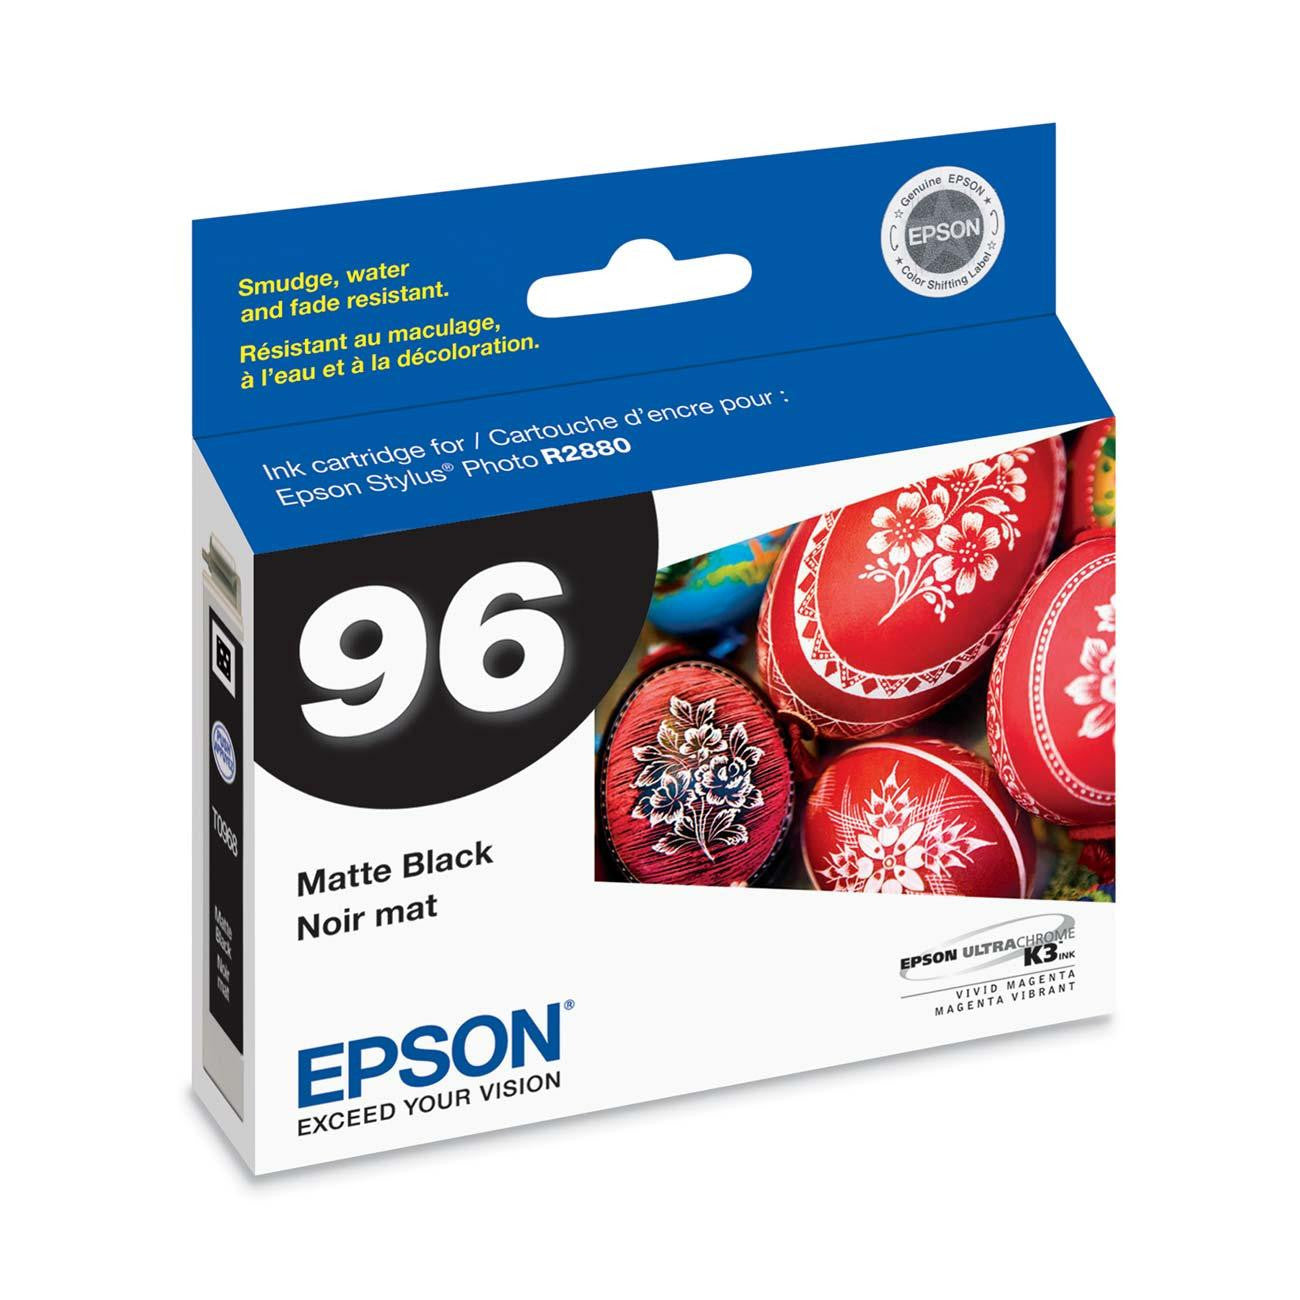 Epson T096820 R2880 Matte Black Ink Cartridge (96), printers ink small format, Epson - Pictureline 